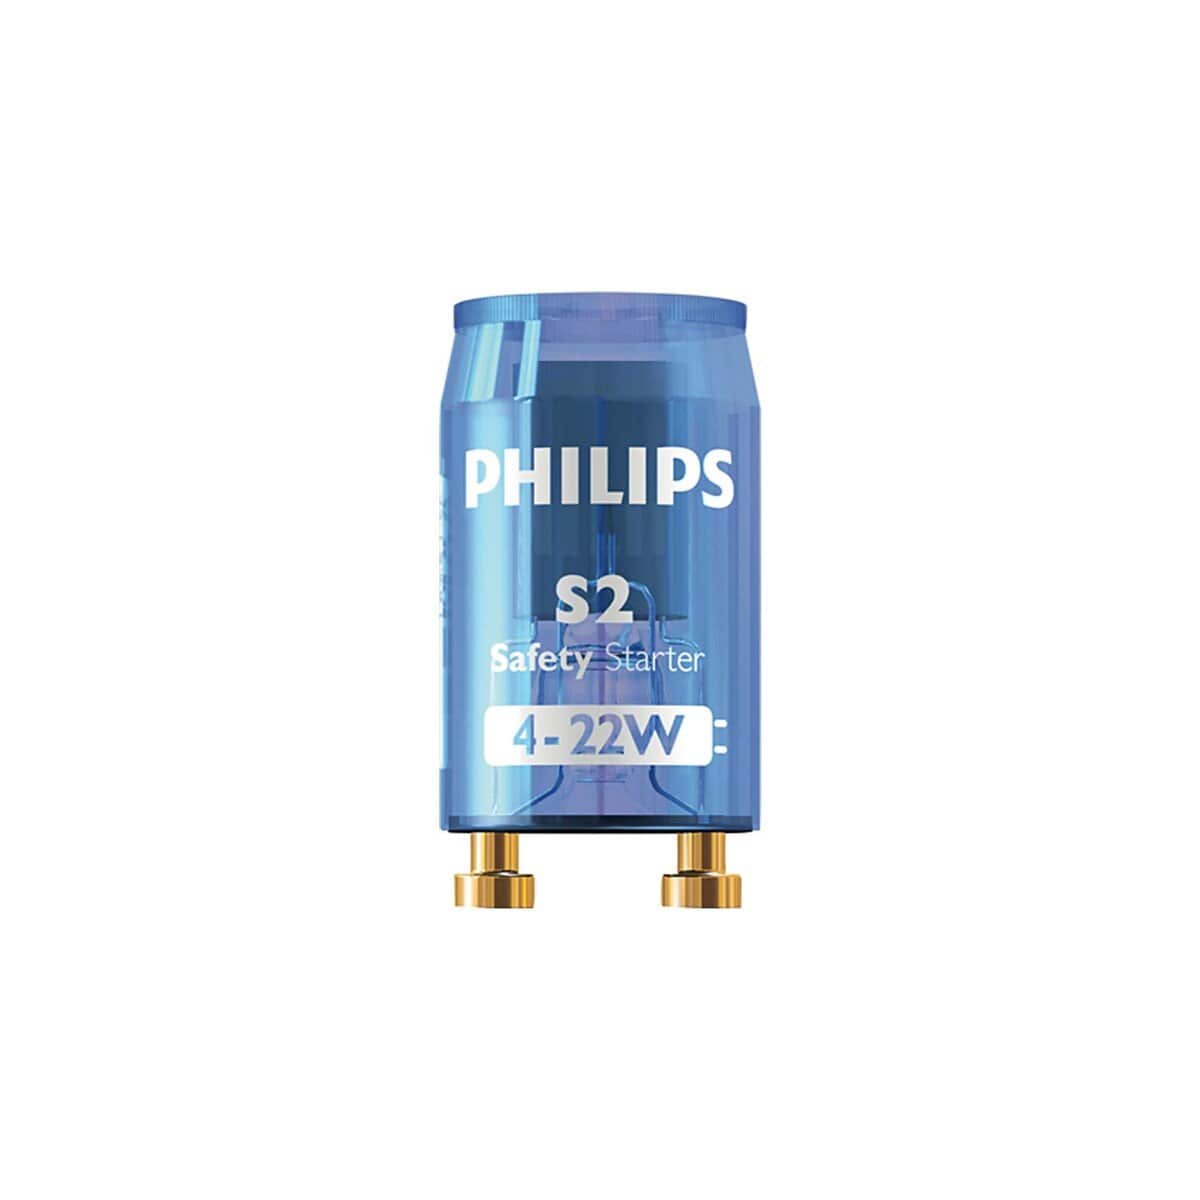 Philips S2 Standard Universal Fluorescent Starter 4-22 Watt 2BL 220/240V | Supply Master | Accra, Ghana Lamps & Lightings Buy Tools hardware Building materials